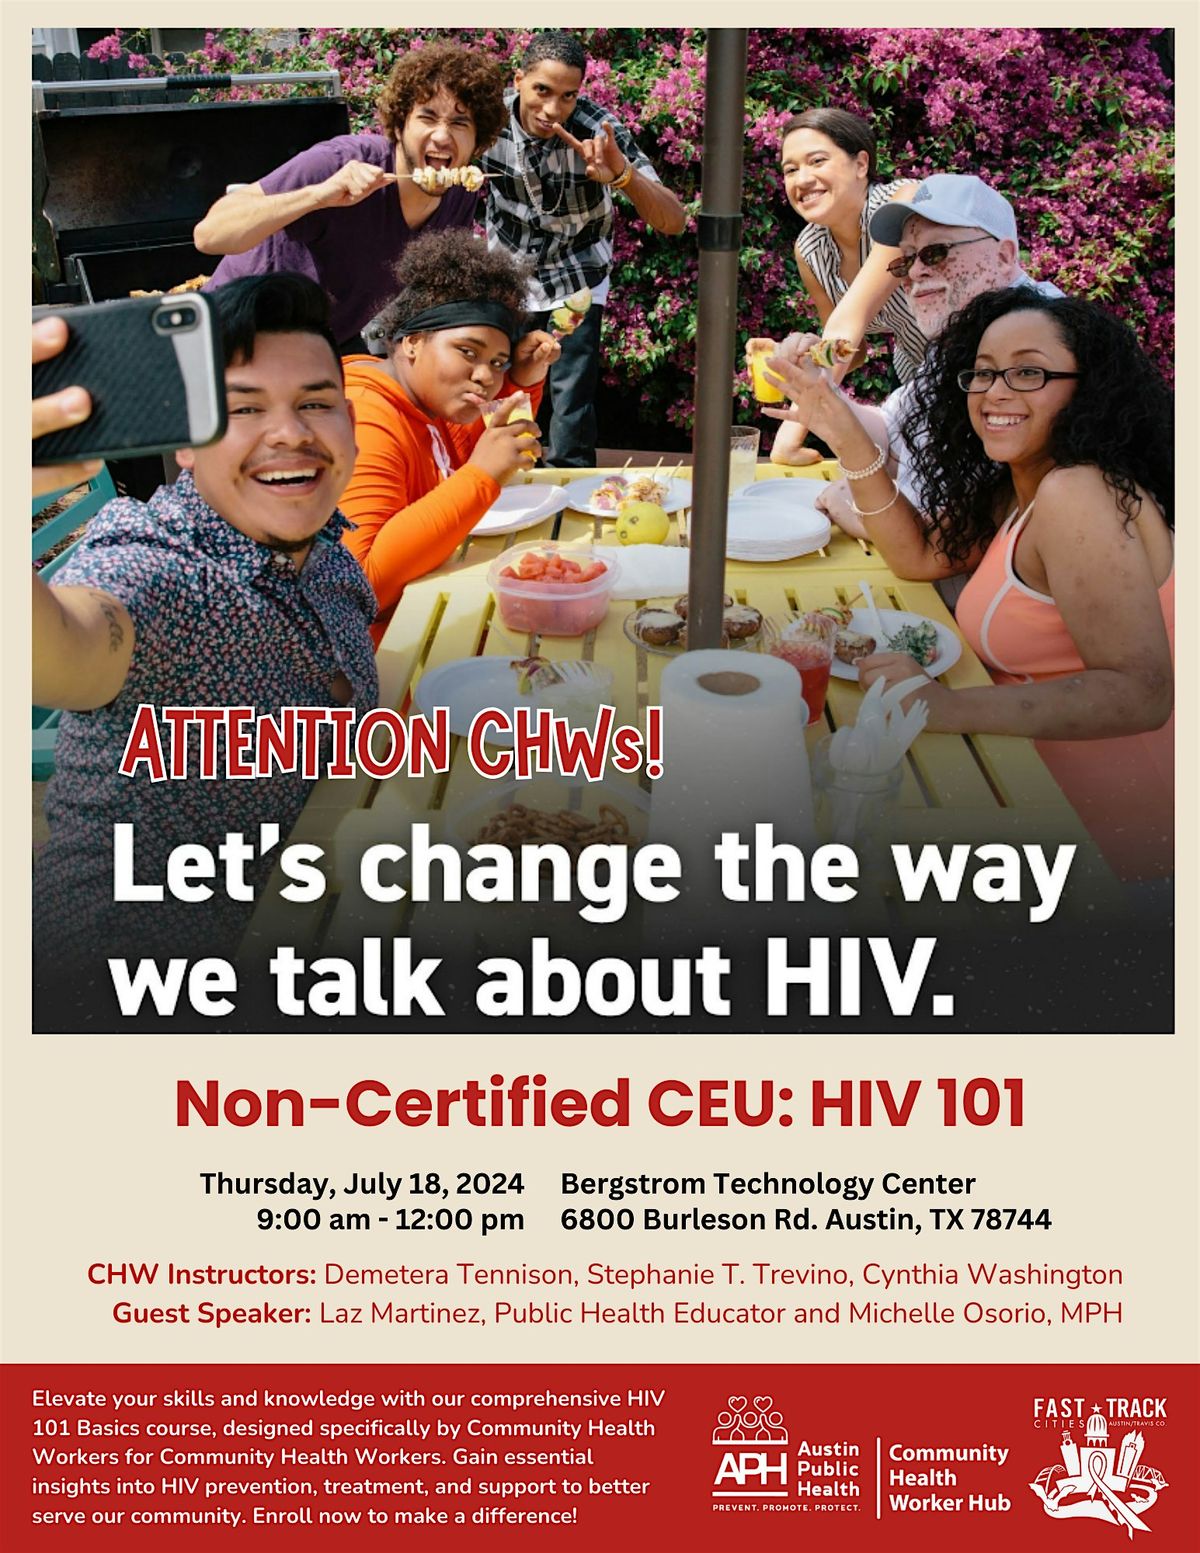 Non-Certified CEU: HIV 101